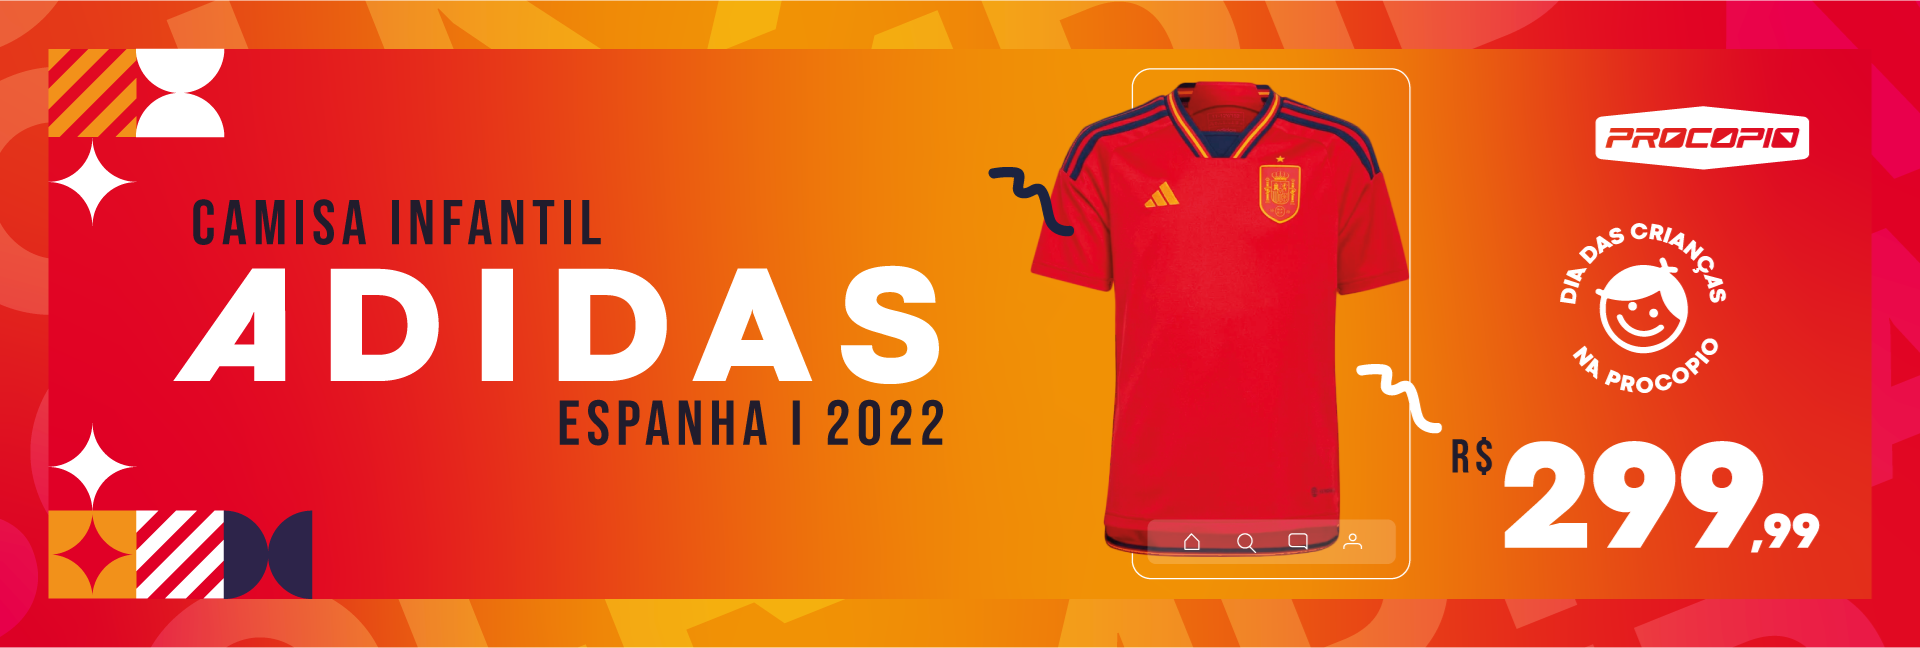 Camisa adidas Espanha I Copa 2022 Qatar